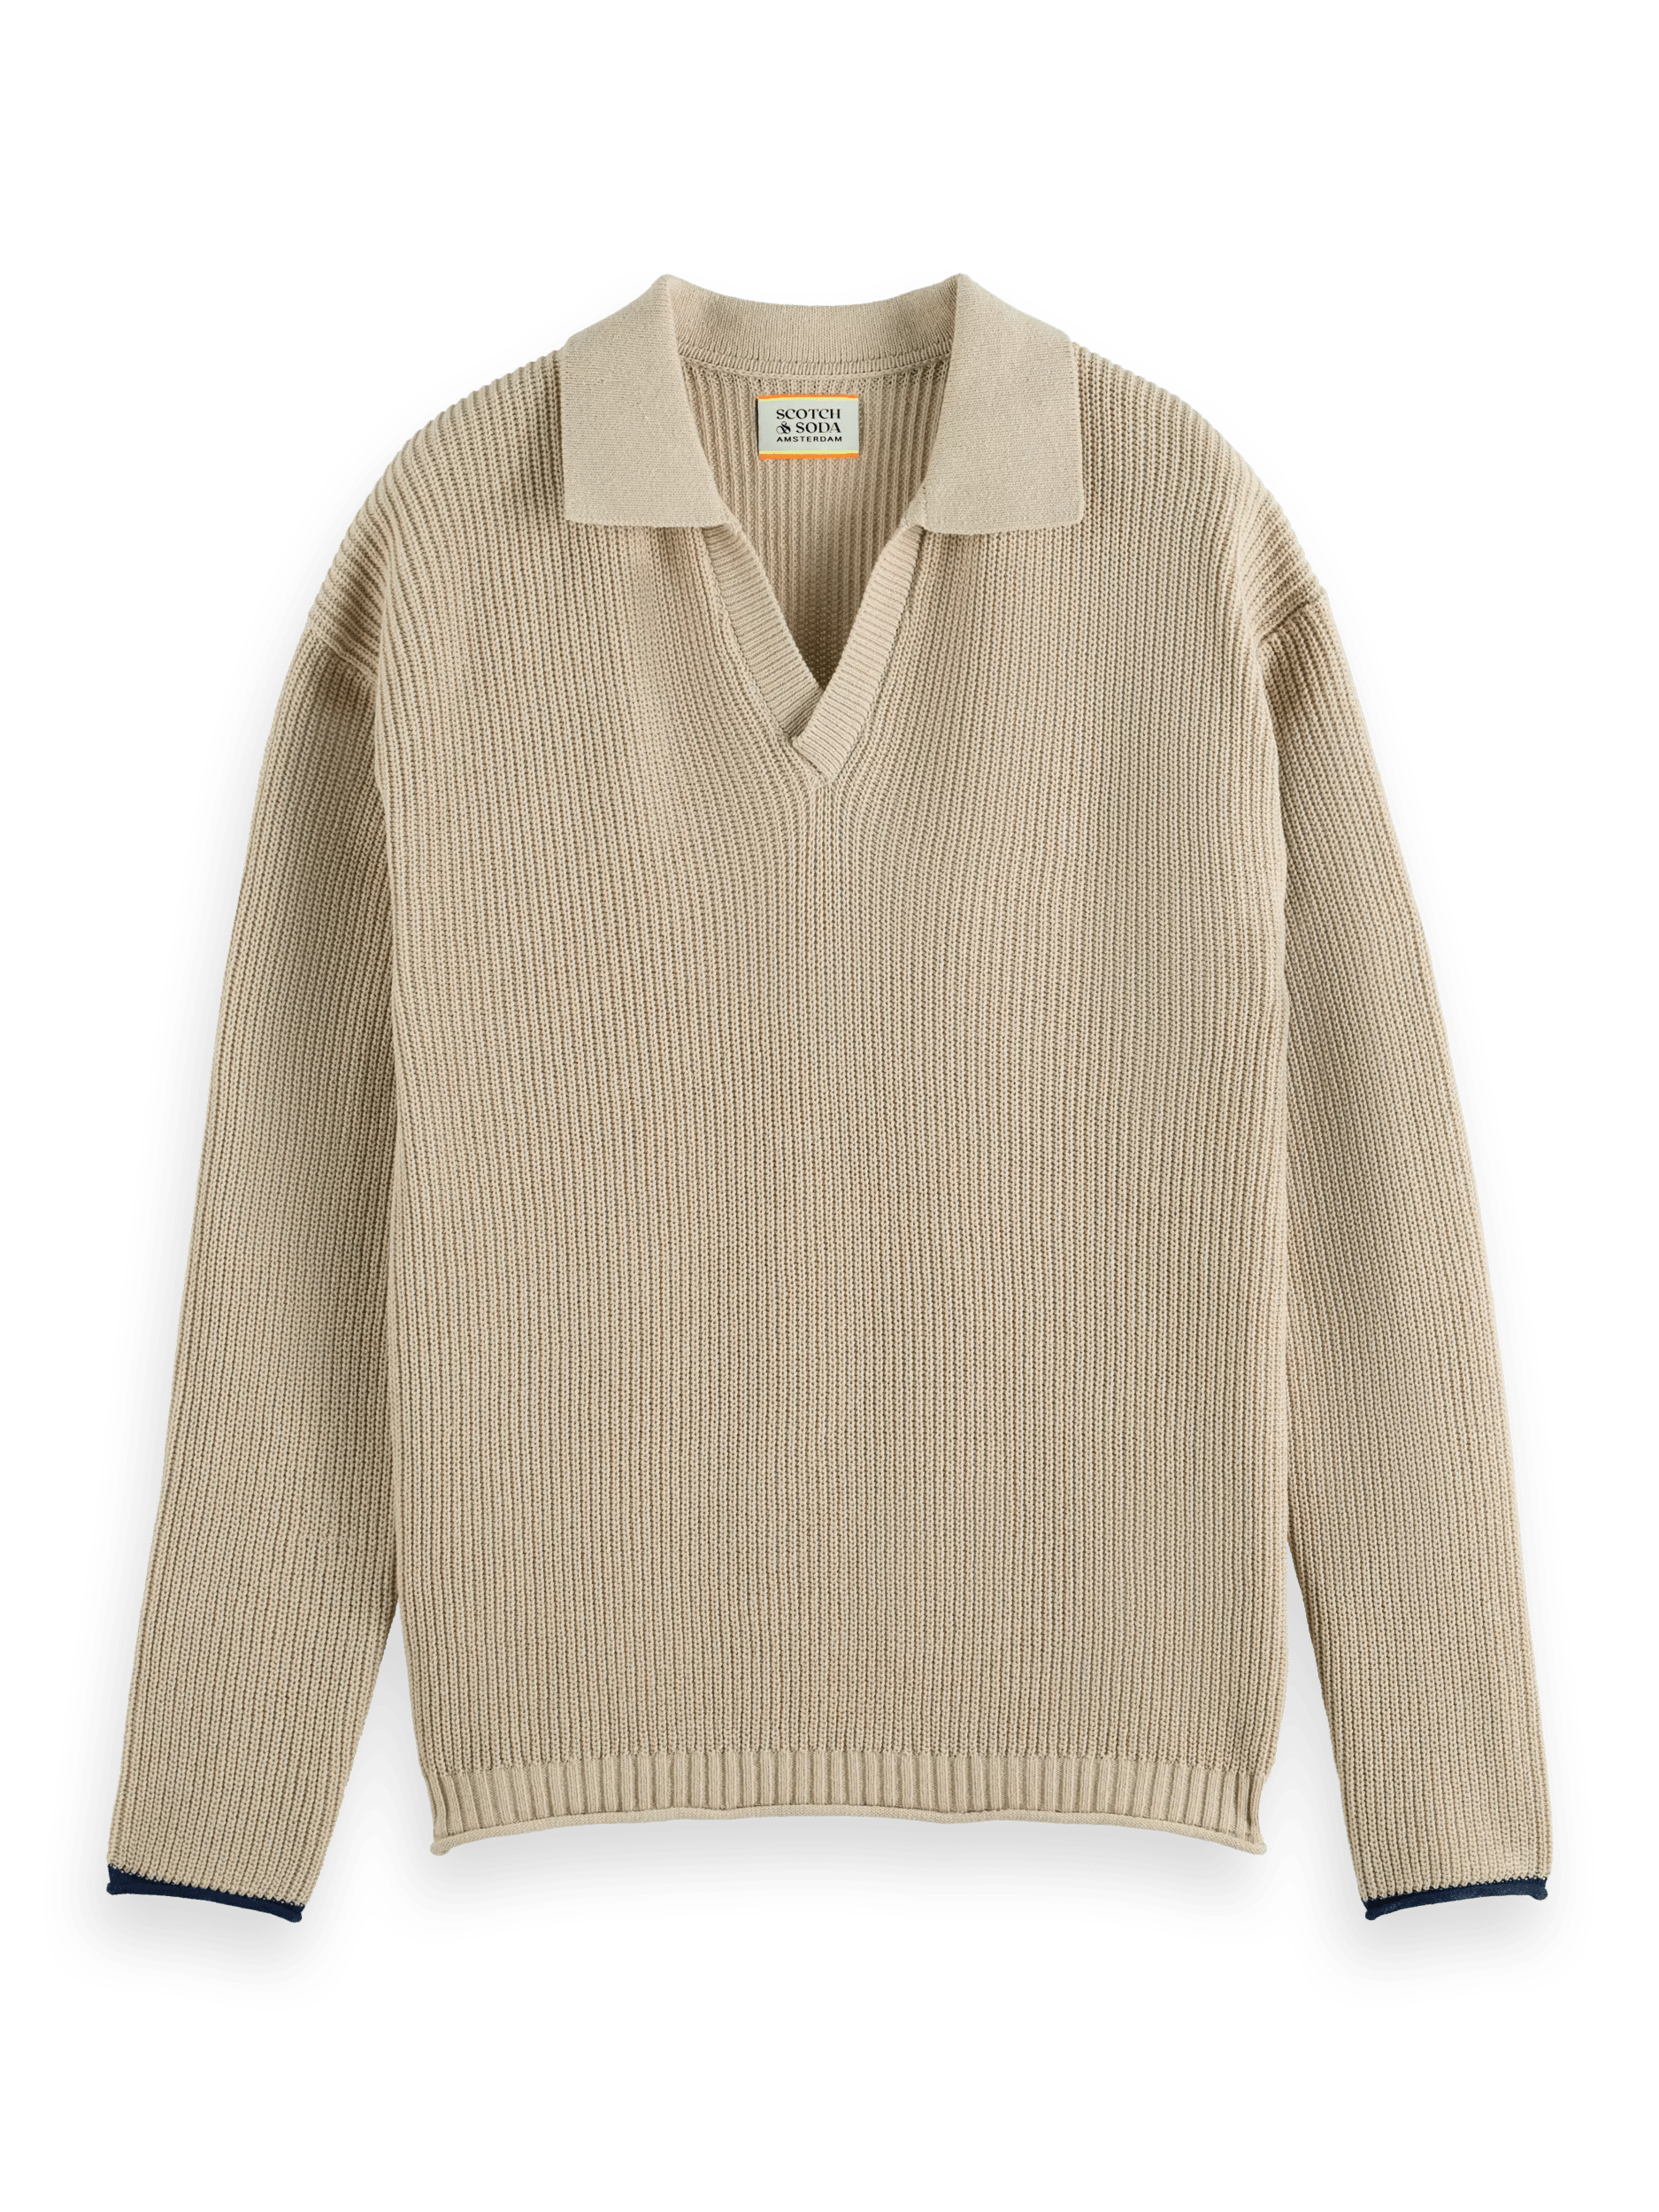 Scotch & Soda V-neck knitted sweater FNT